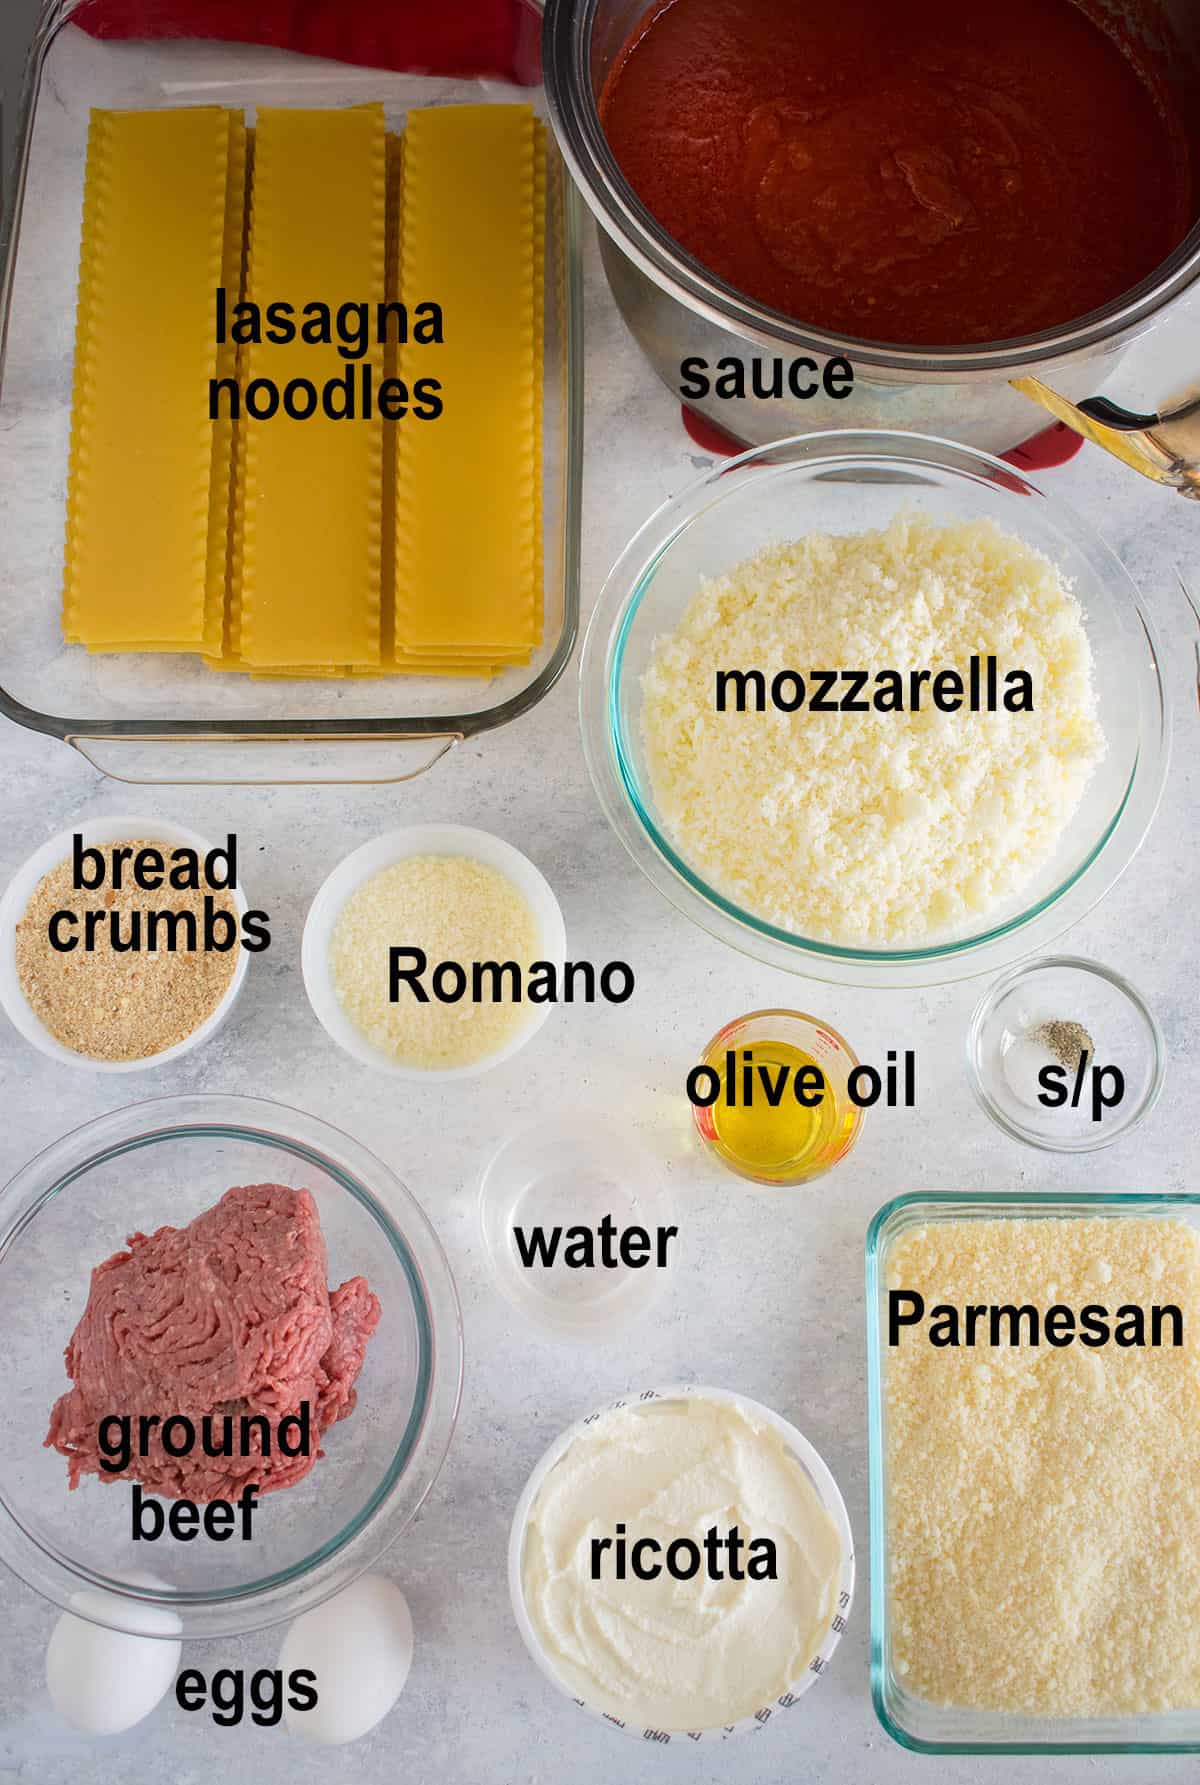 lasagna ingredients